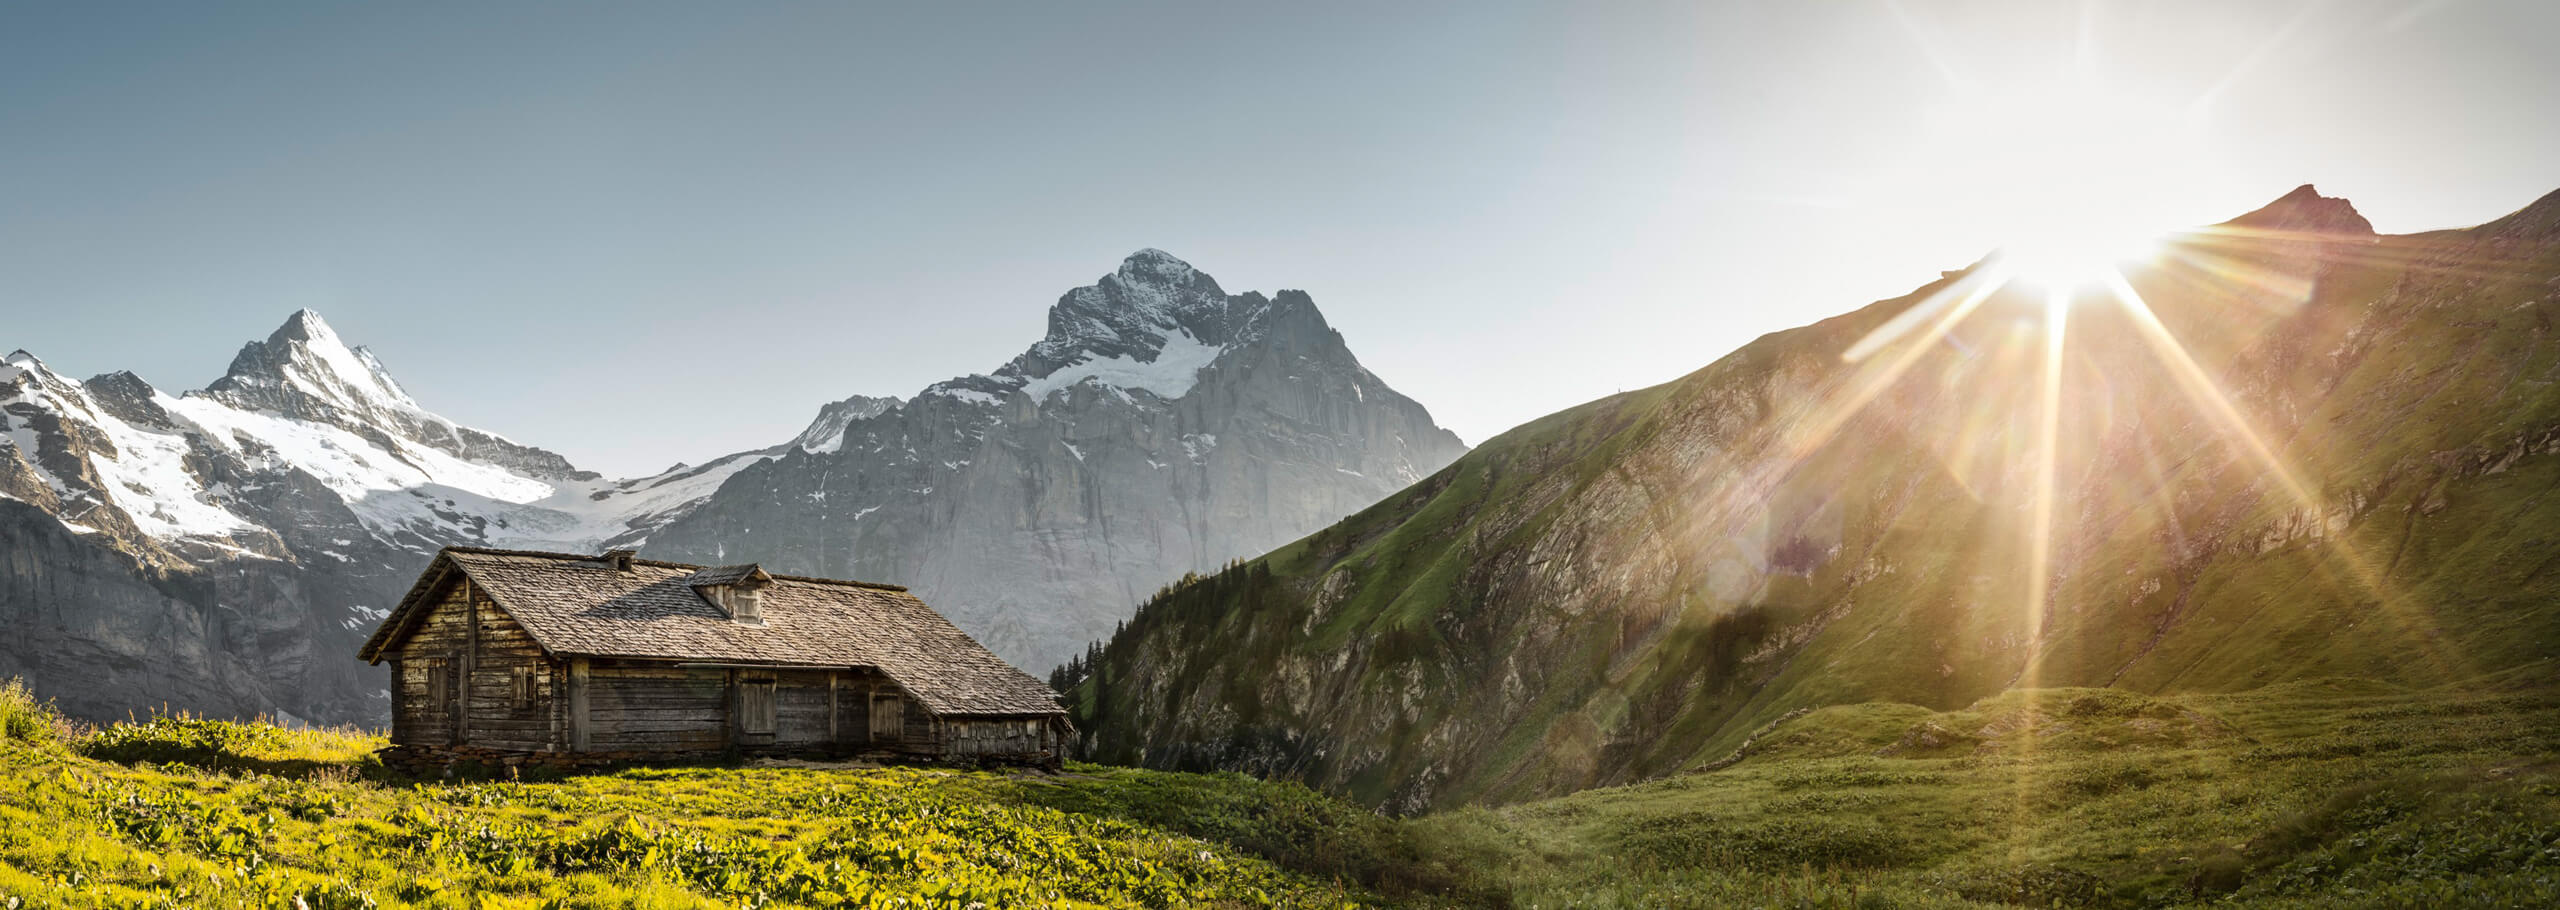 Ricola:  Win an unforgettable holiday to Switzerland